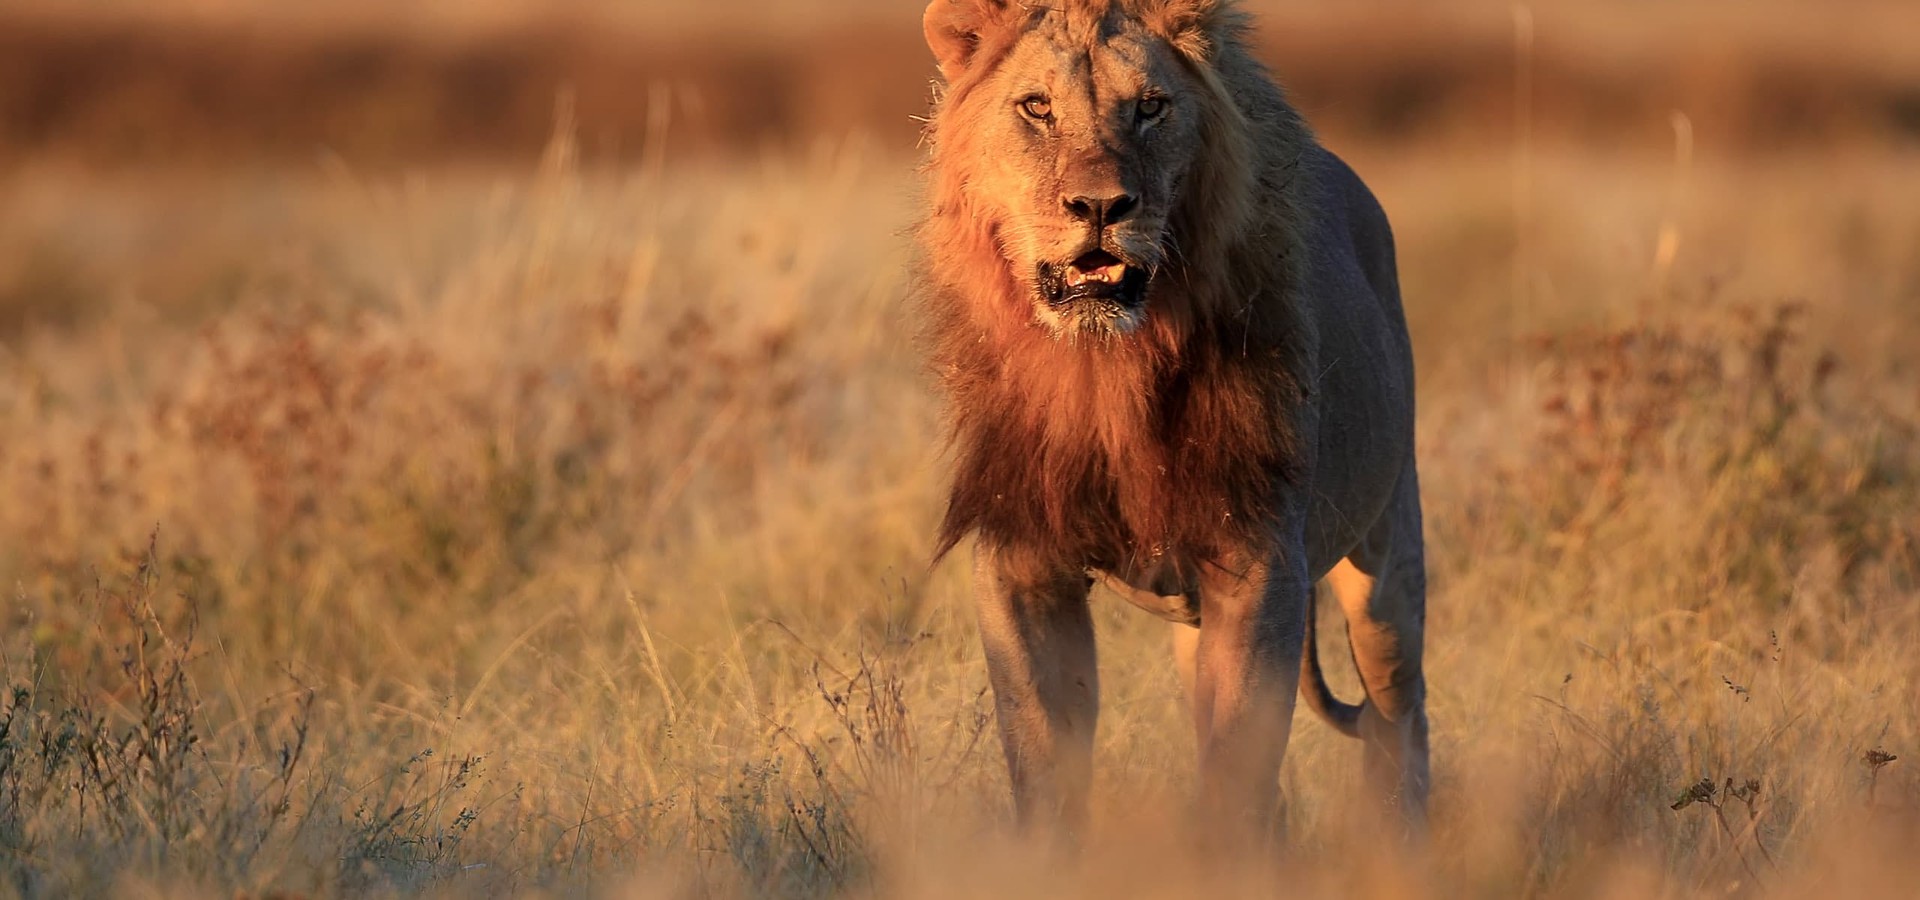 pelicula de leones safari sangriento